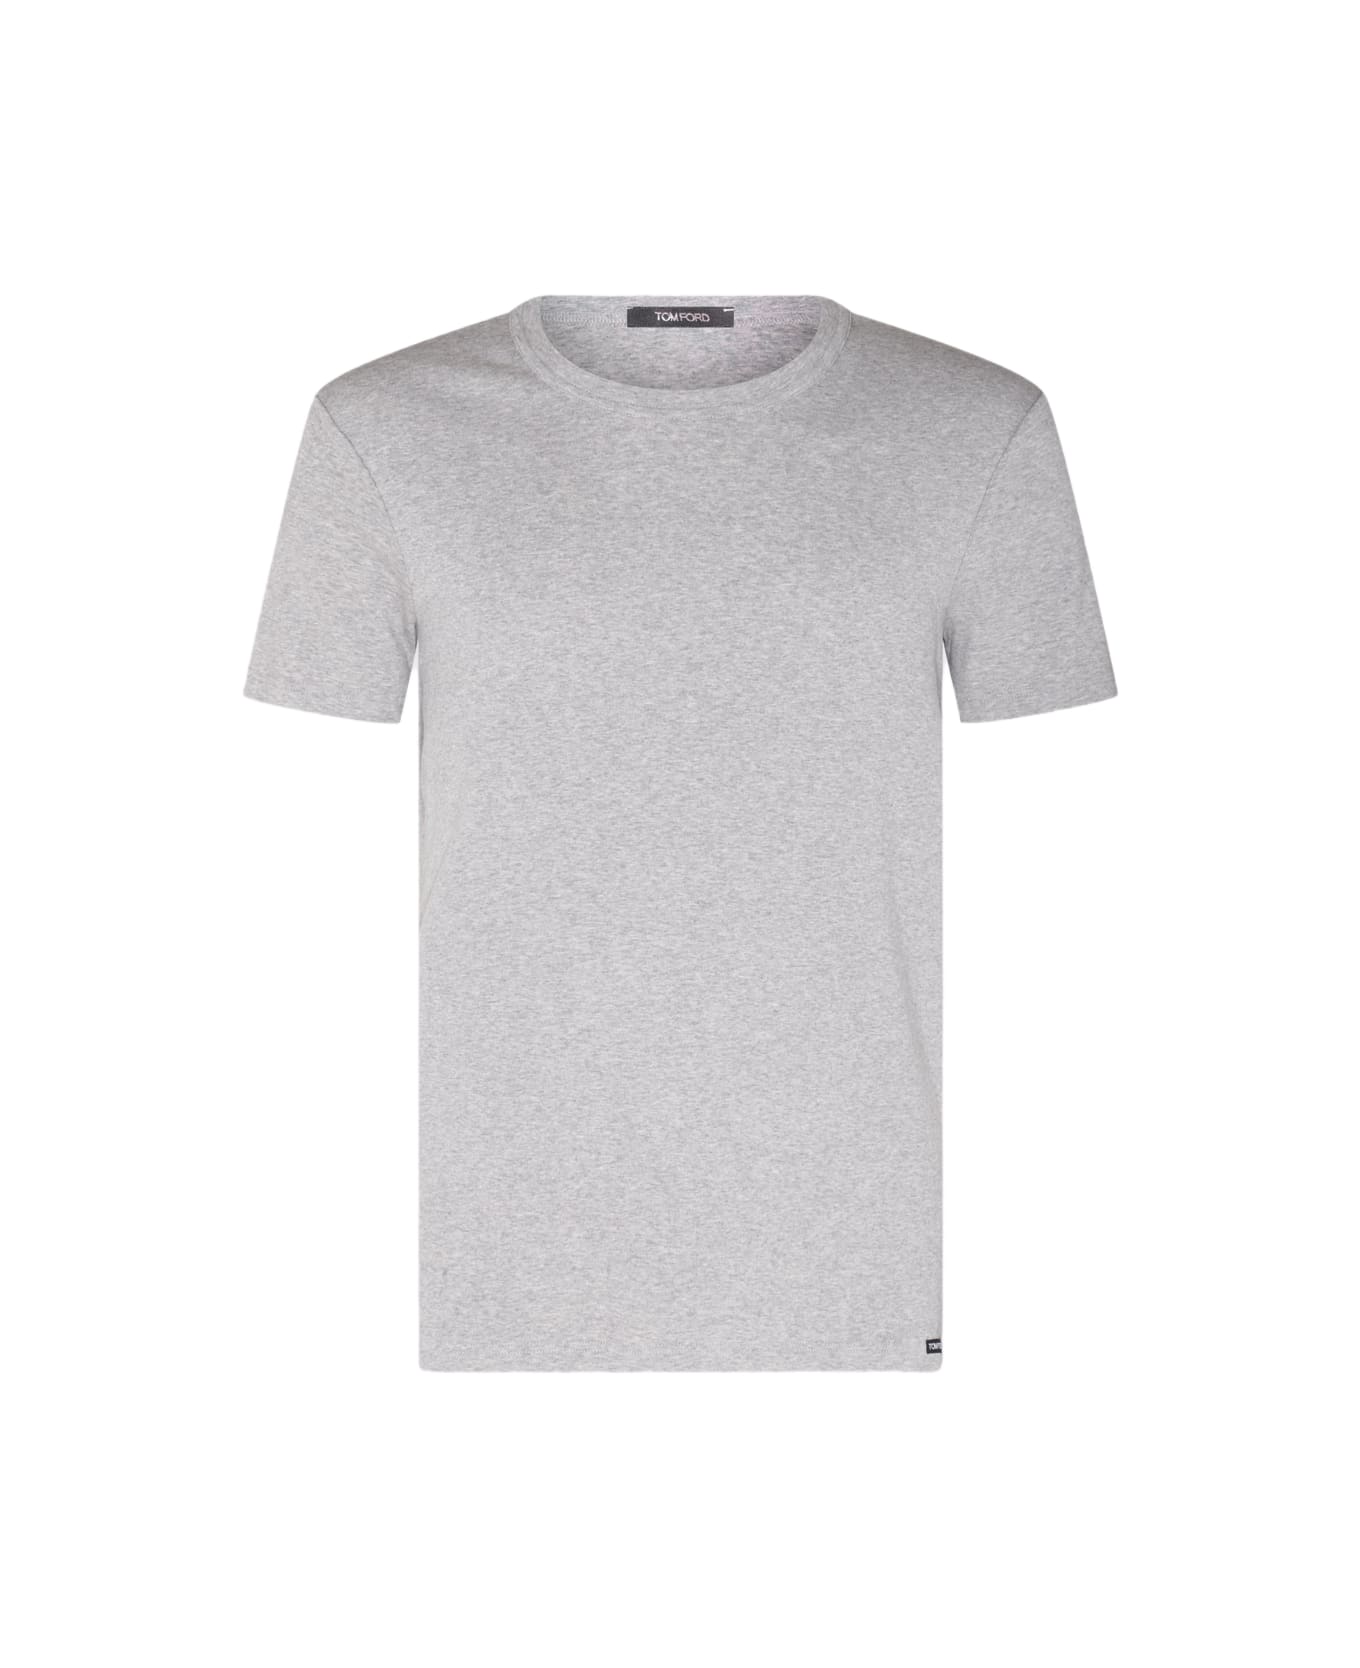 Tom Ford Grey Cotton Blend T-shirt - Grey シャツ